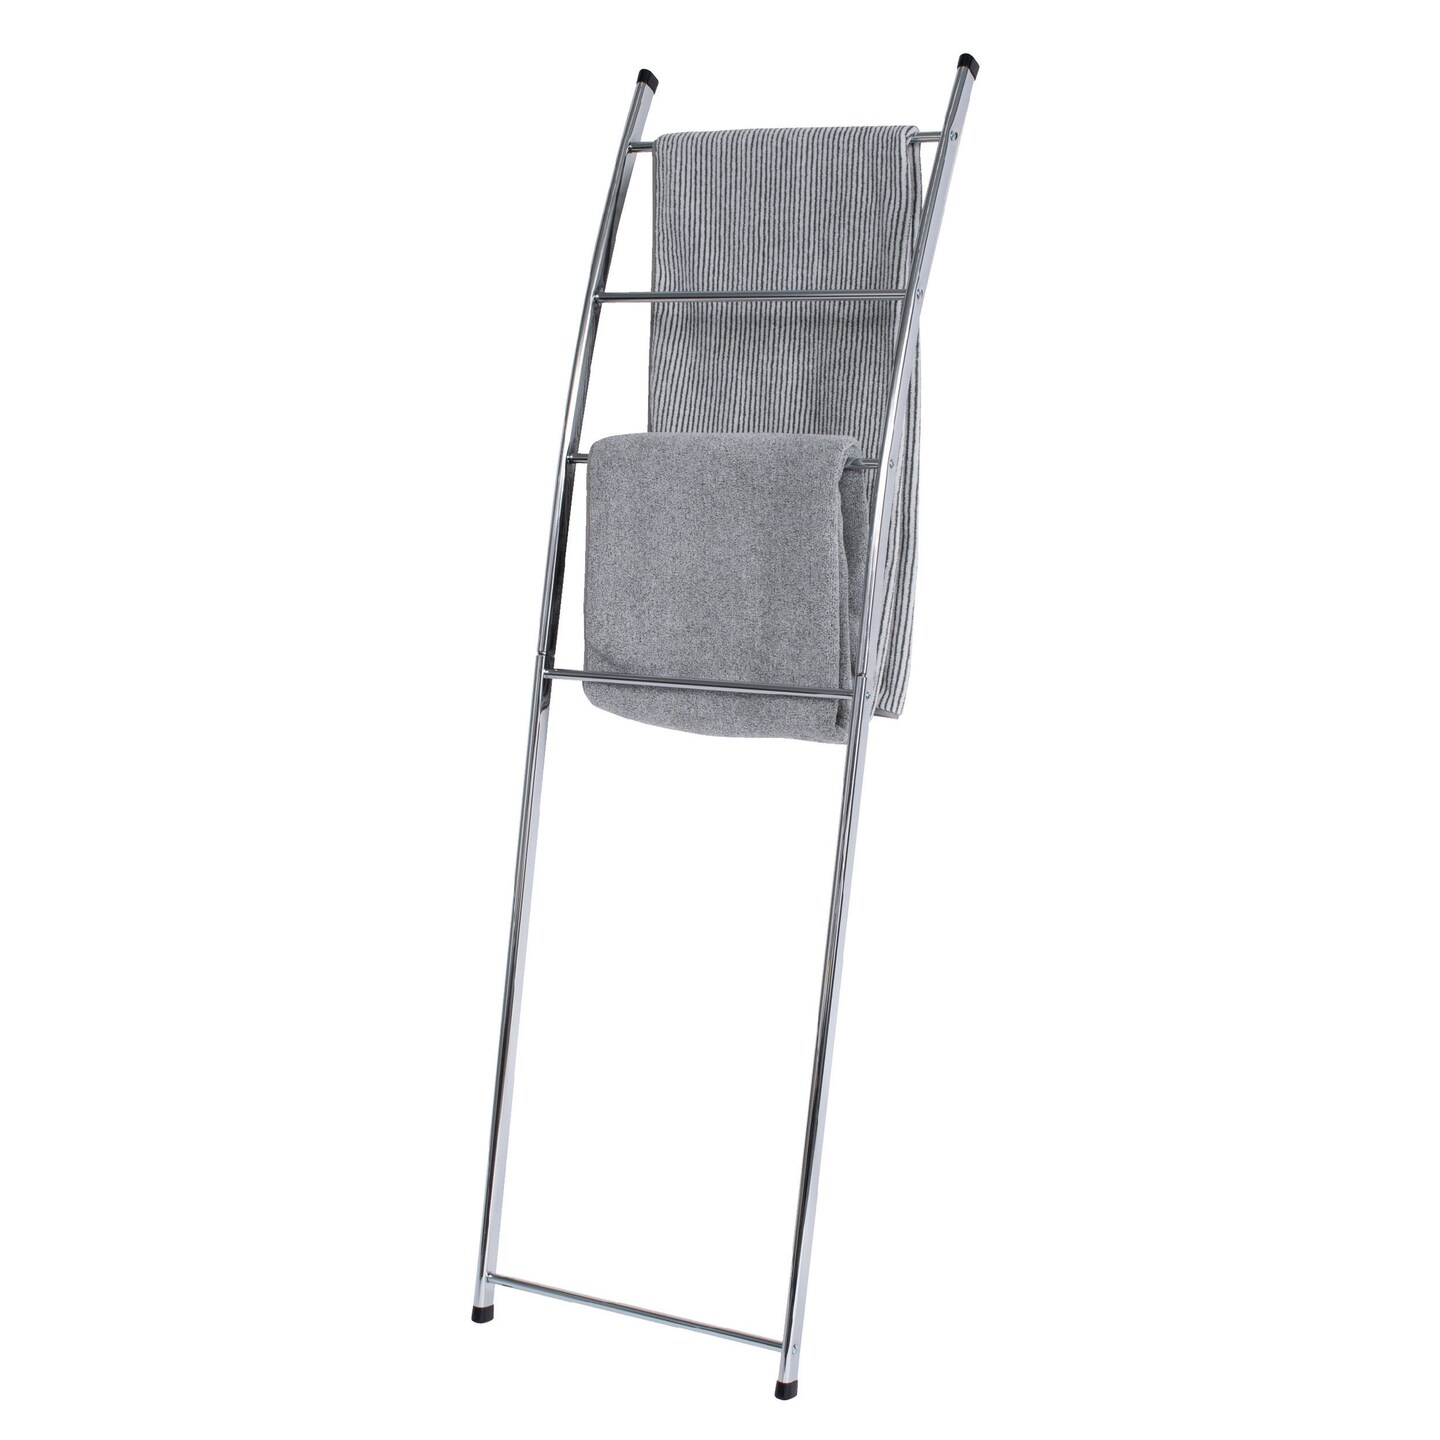 Wall Leaning Free Standing Towel Ladder Stand, Metal Blanket Ladder, Freestanding Hanging Rack for Bathroom Floor, 59 inch